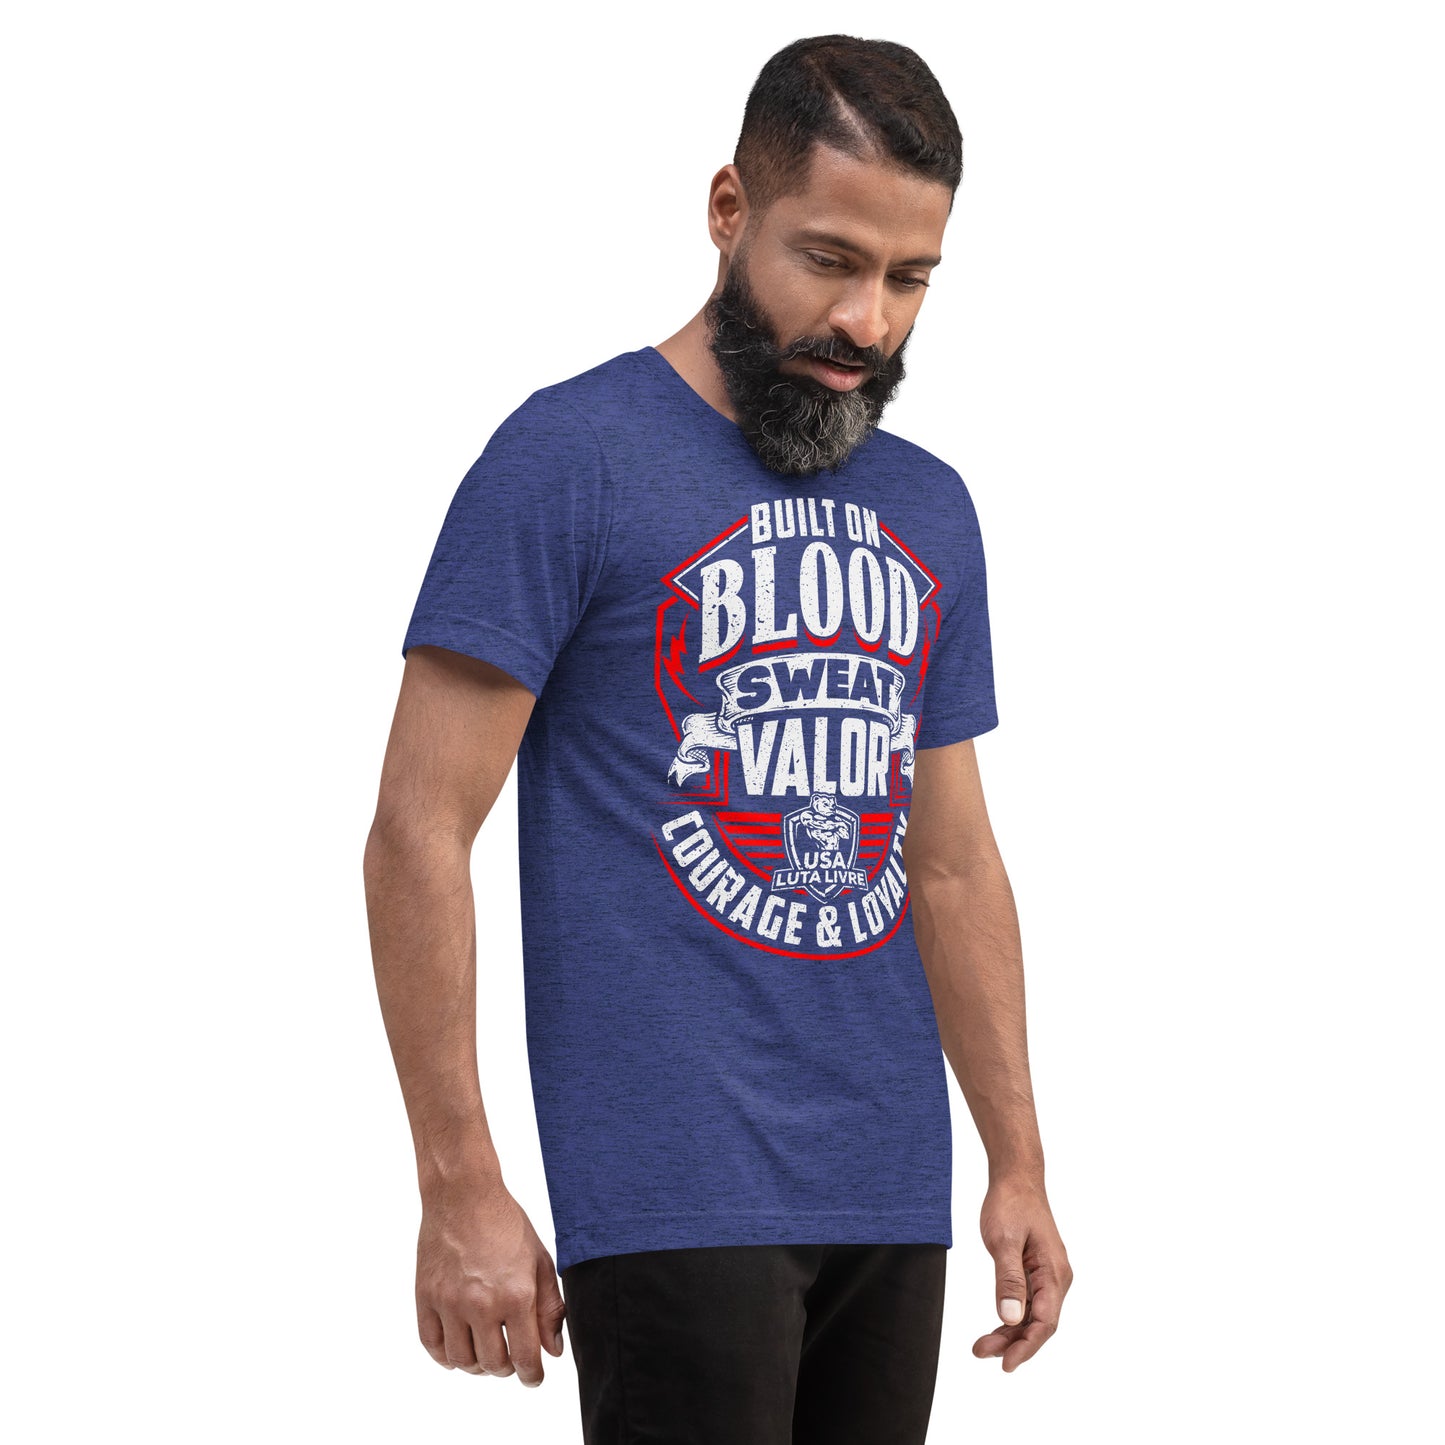 USA Luta Livre™ Valor short sleeve t-shirt